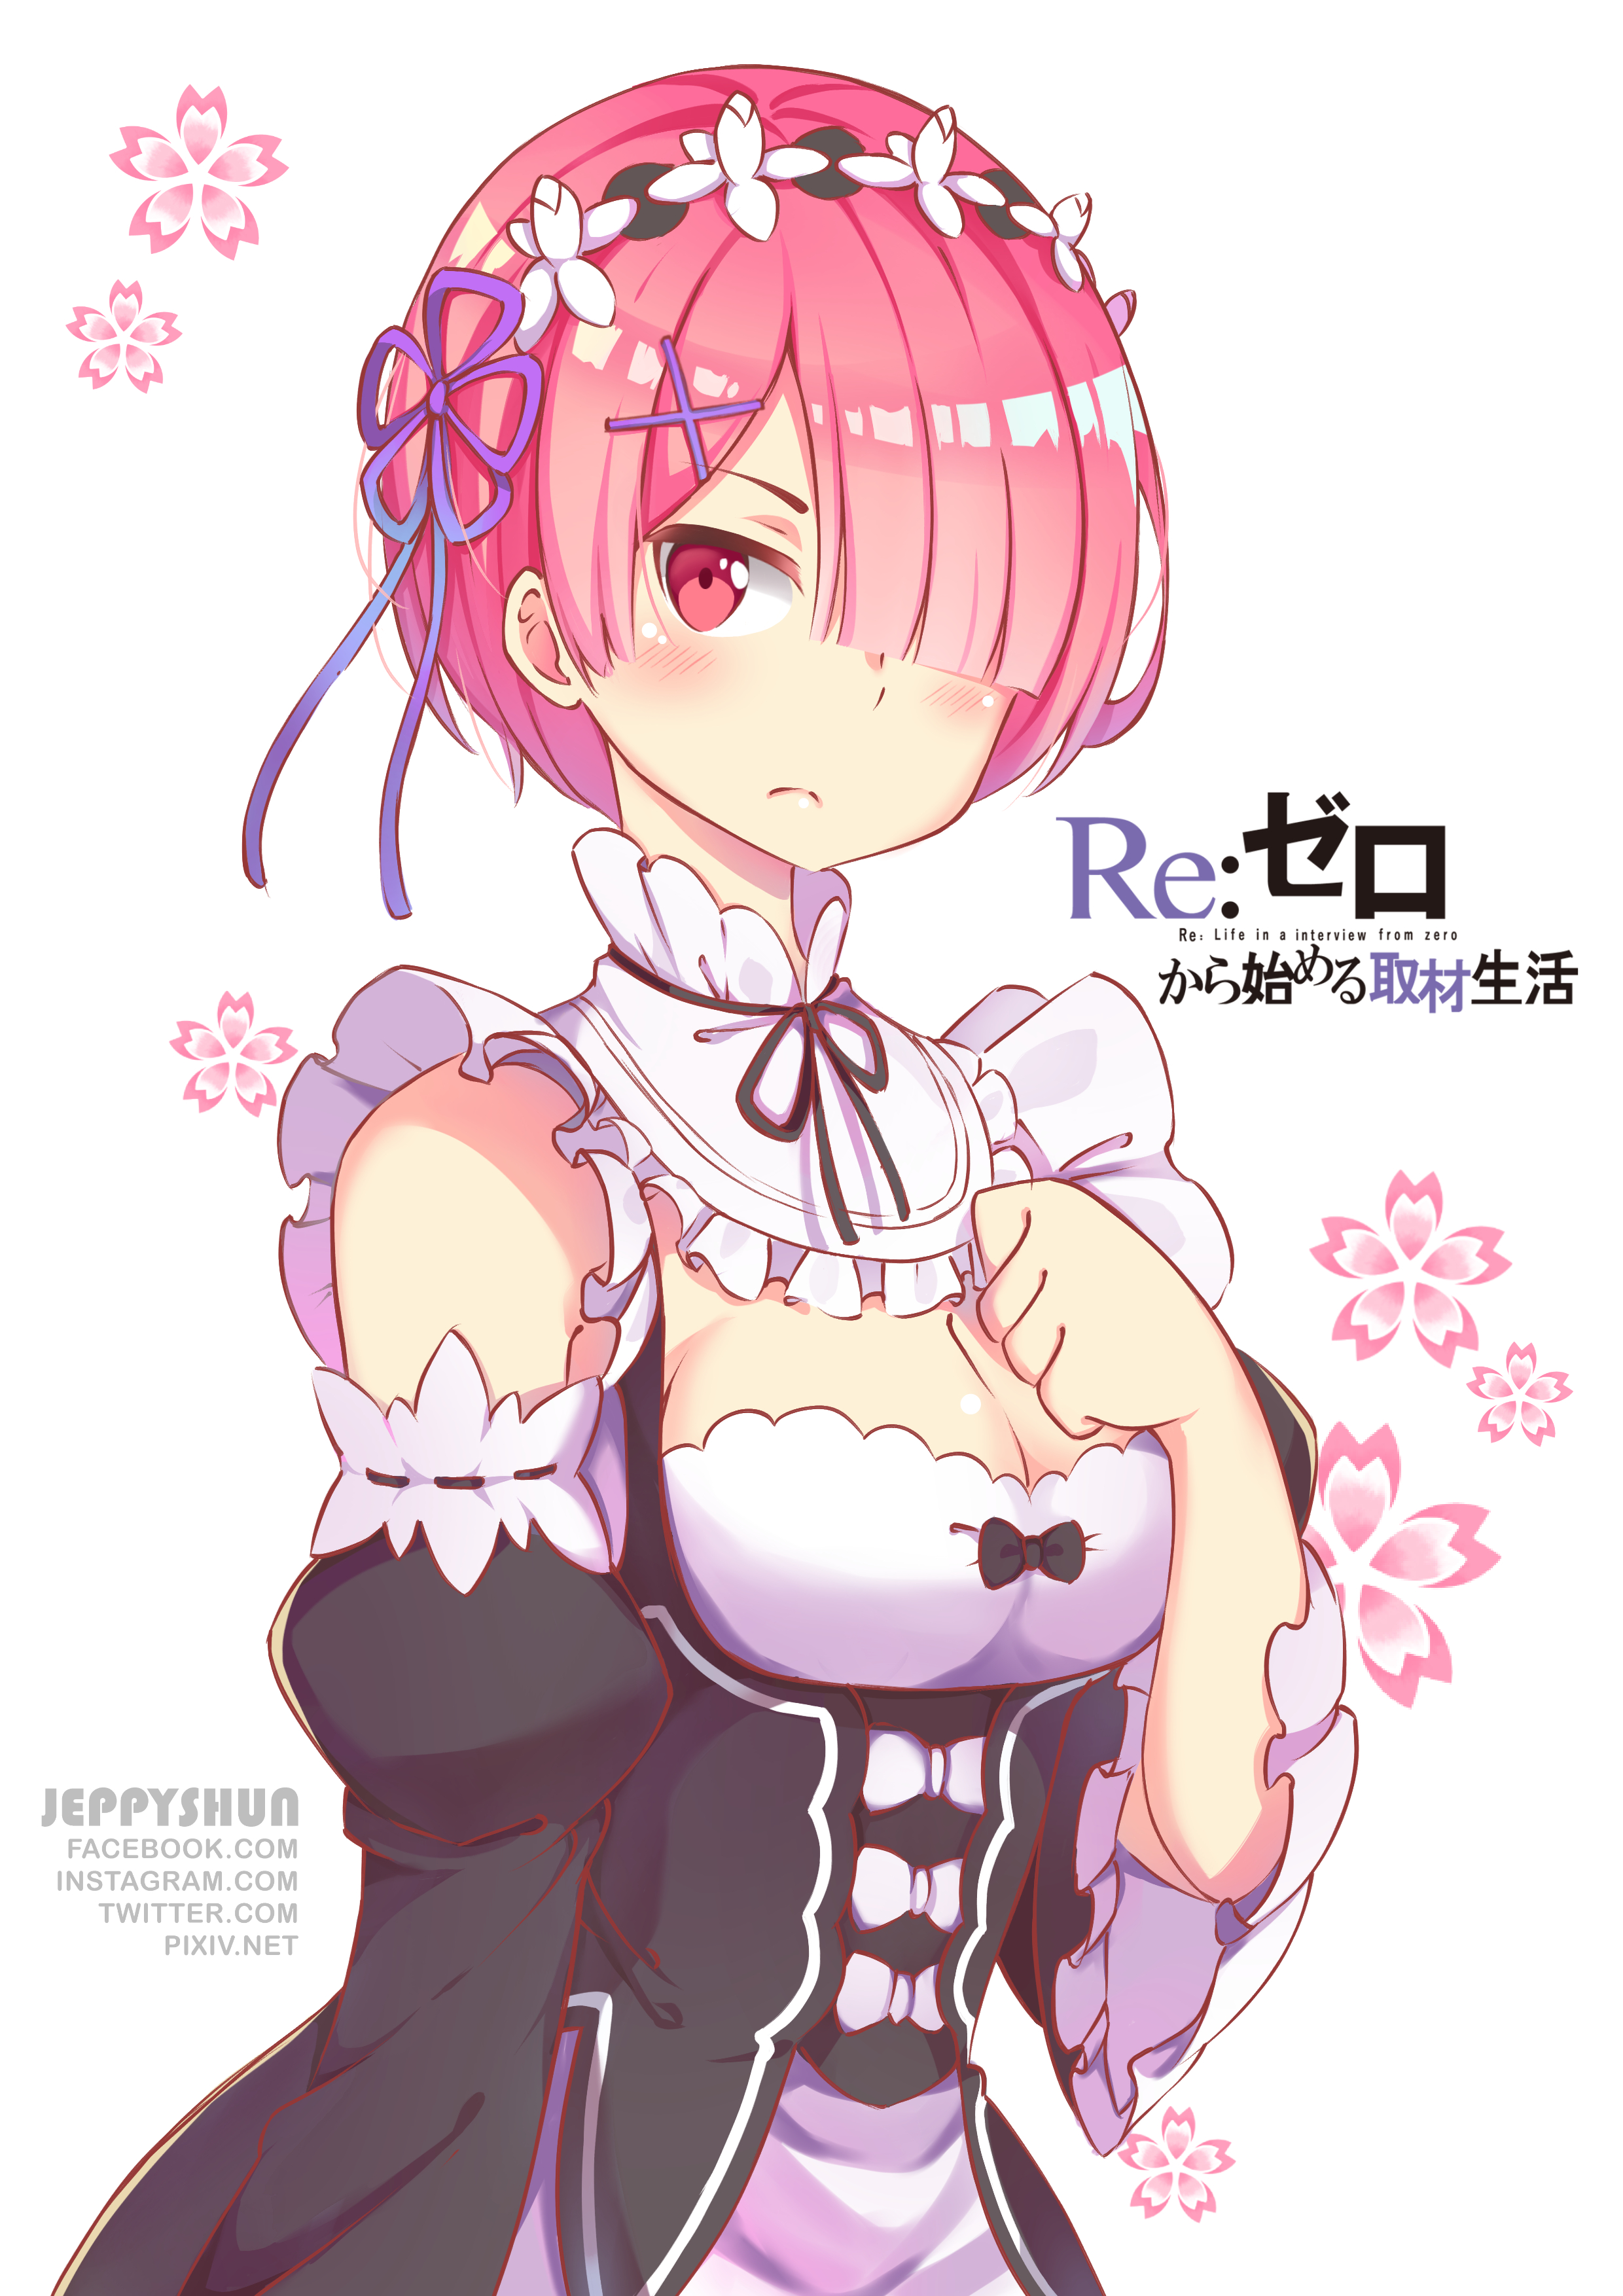 Anime 2480x3508 anime anime girls Re:Zero Kara Hajimeru Isekai Seikatsu Ram (Re: Zero) pink hair maid maid outfit